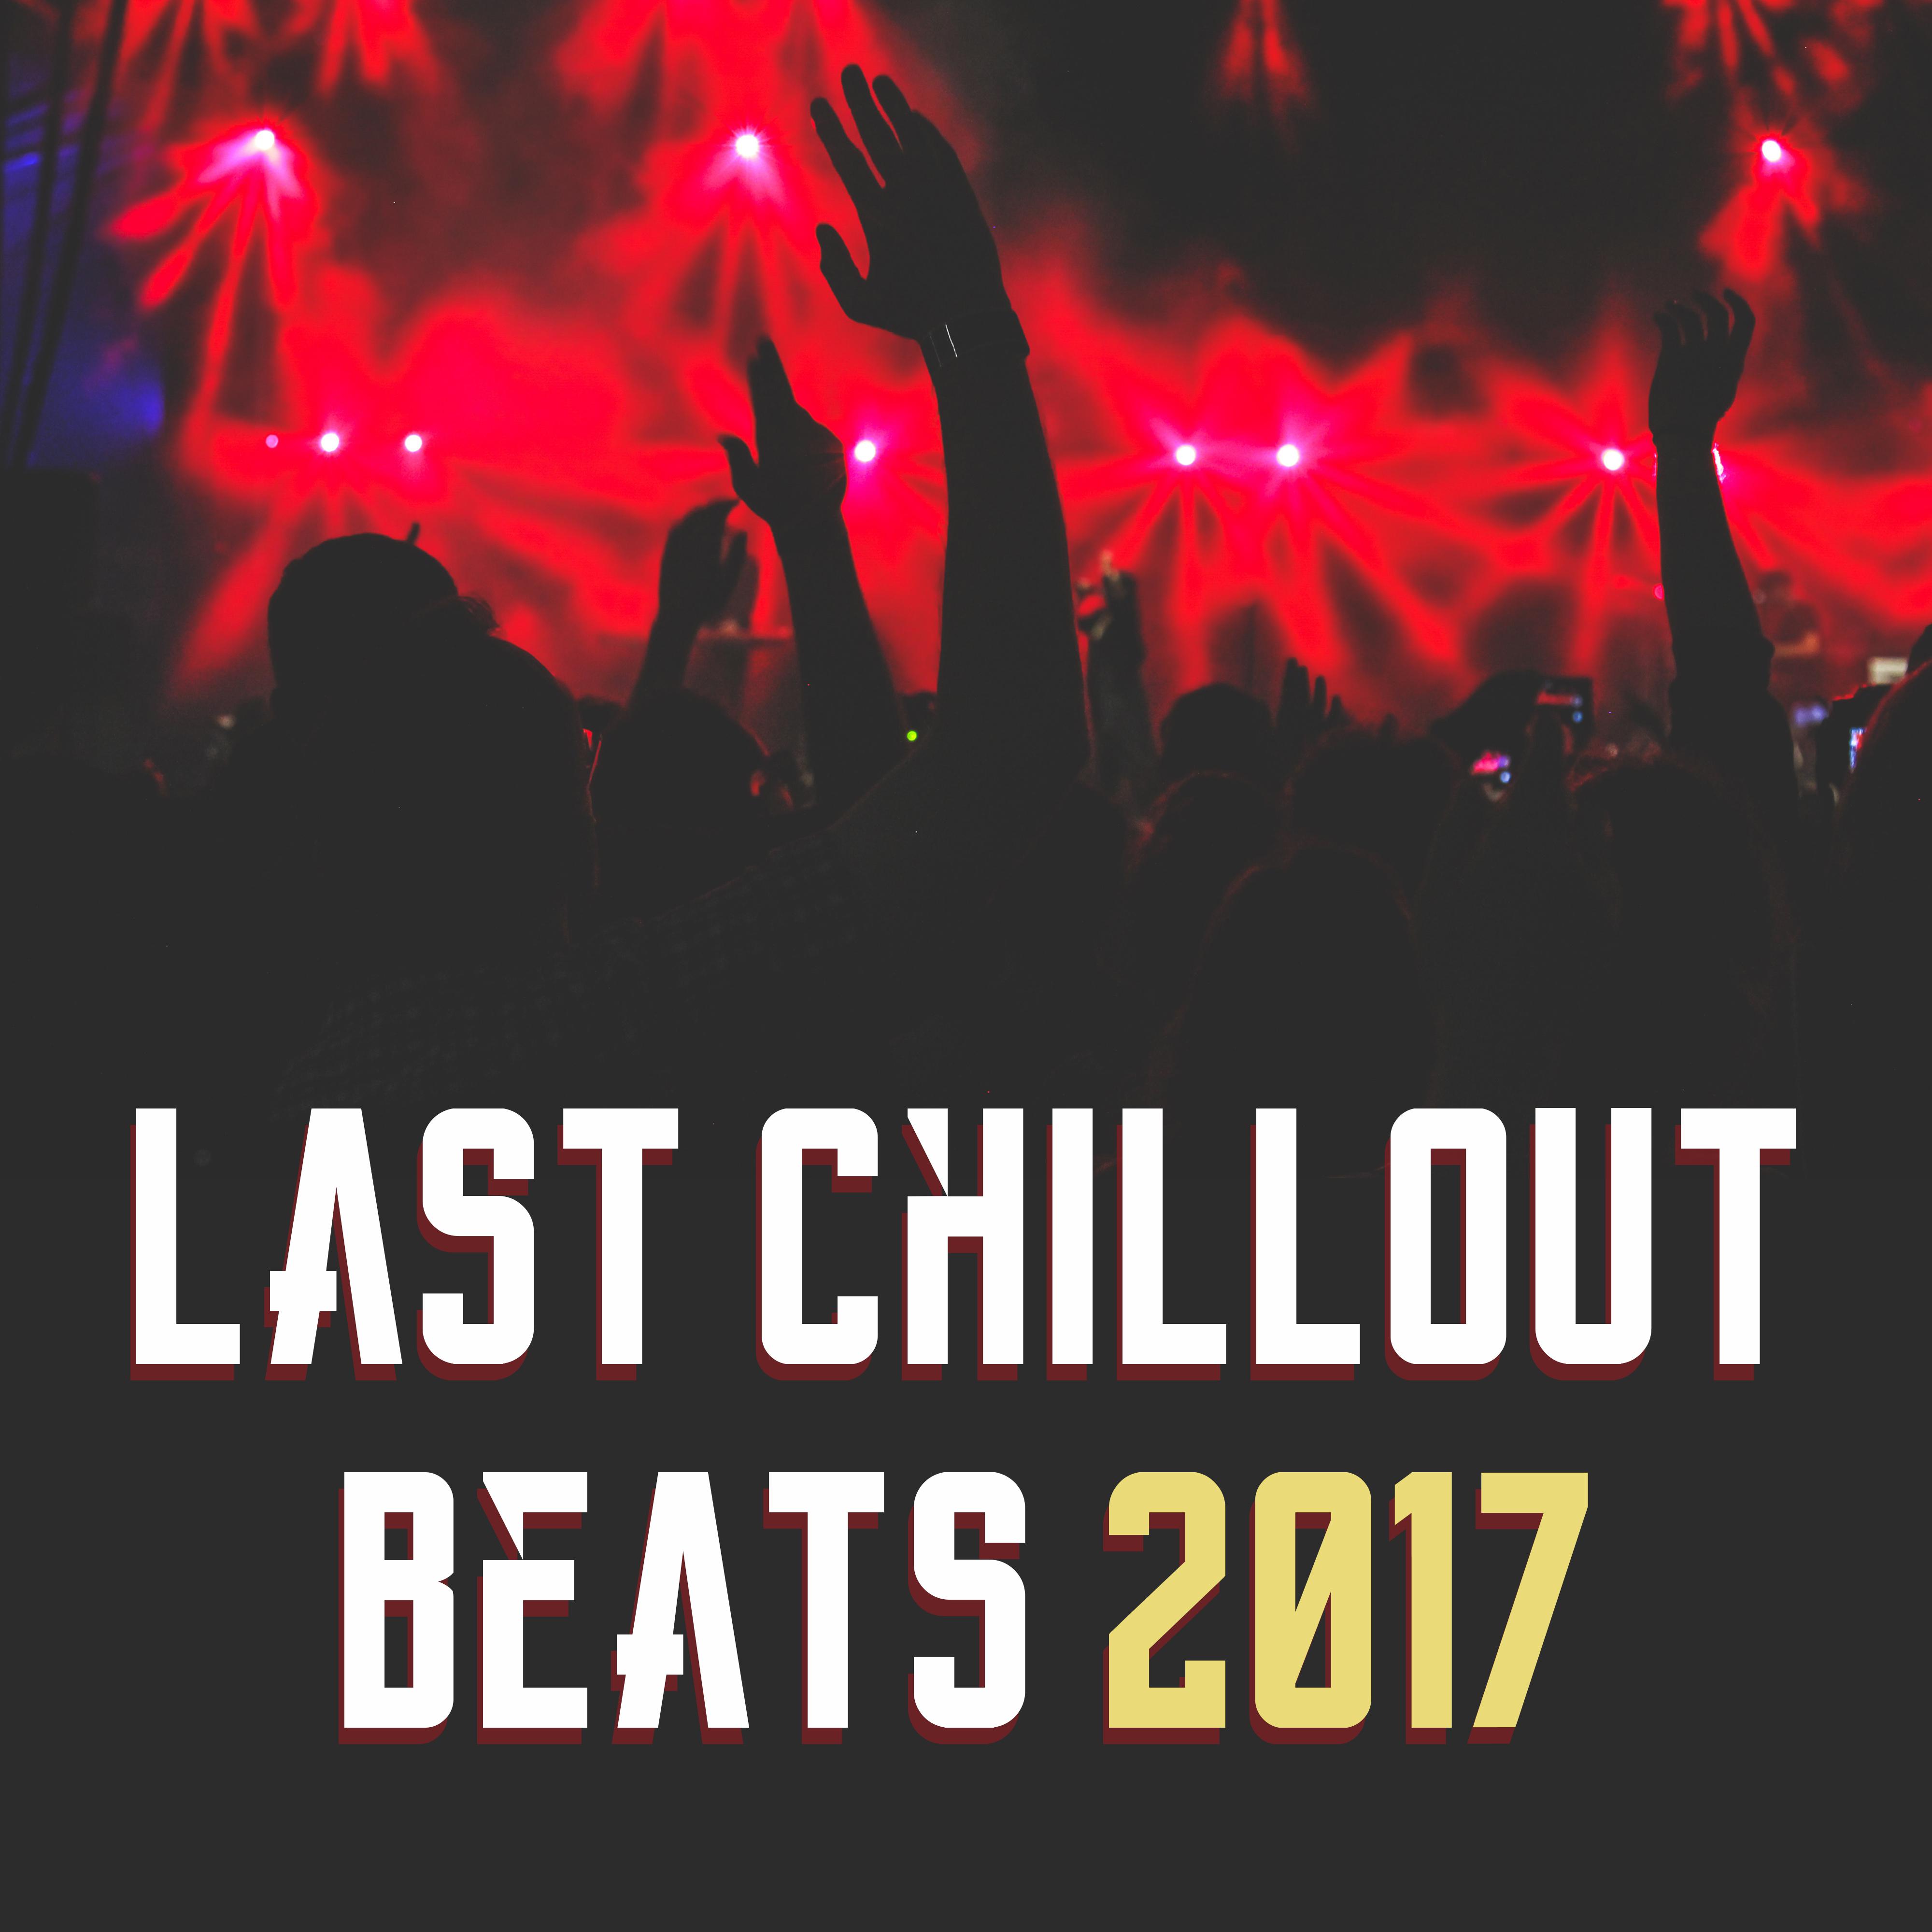 Last Chillout Beats 2017